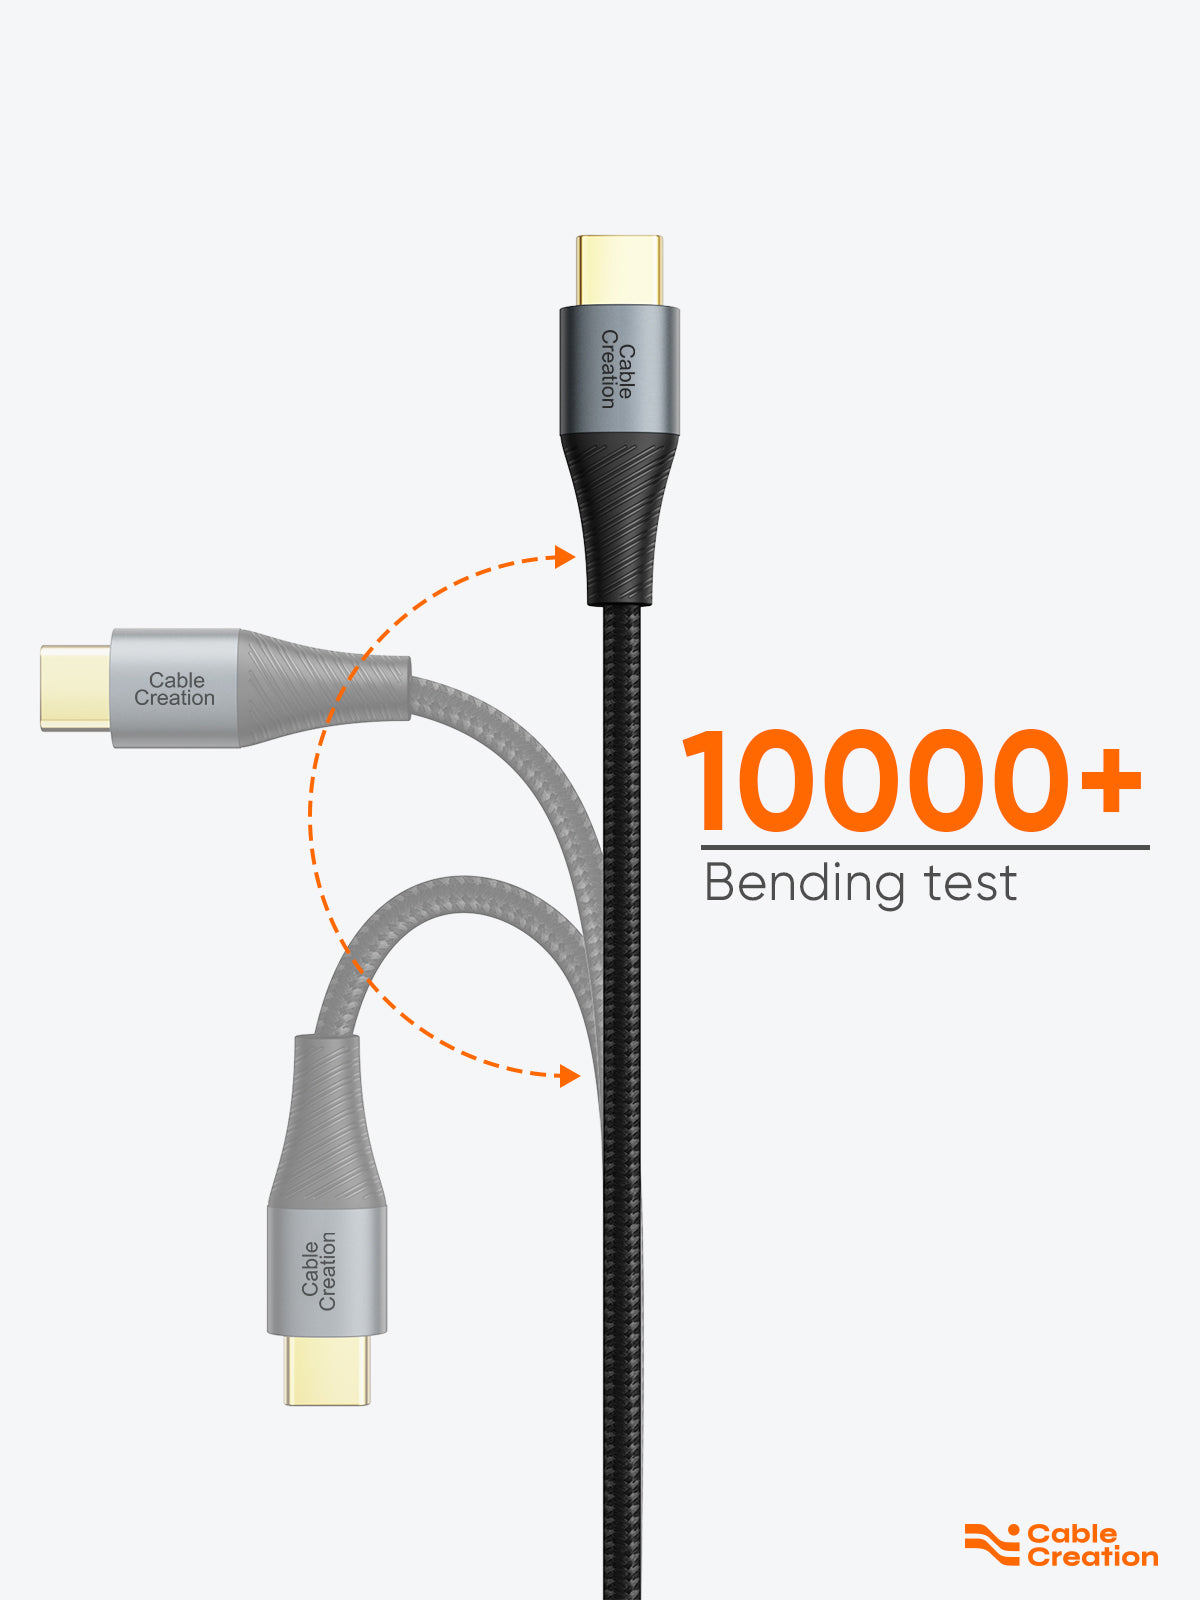 macbook usb-c cable durability